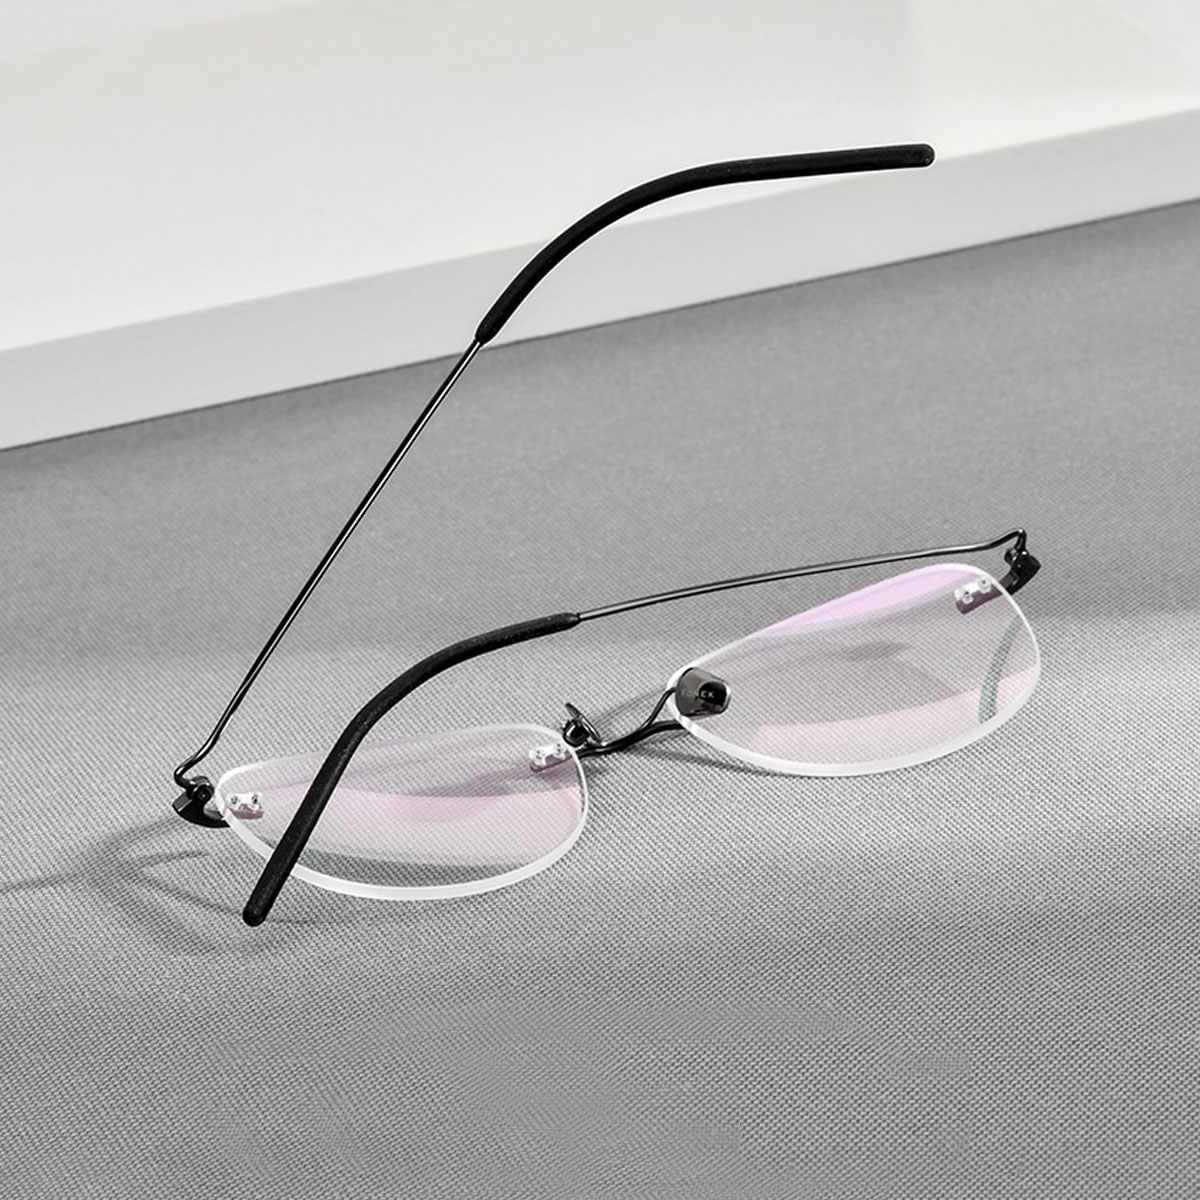 hypoallergenic eyeglass frames